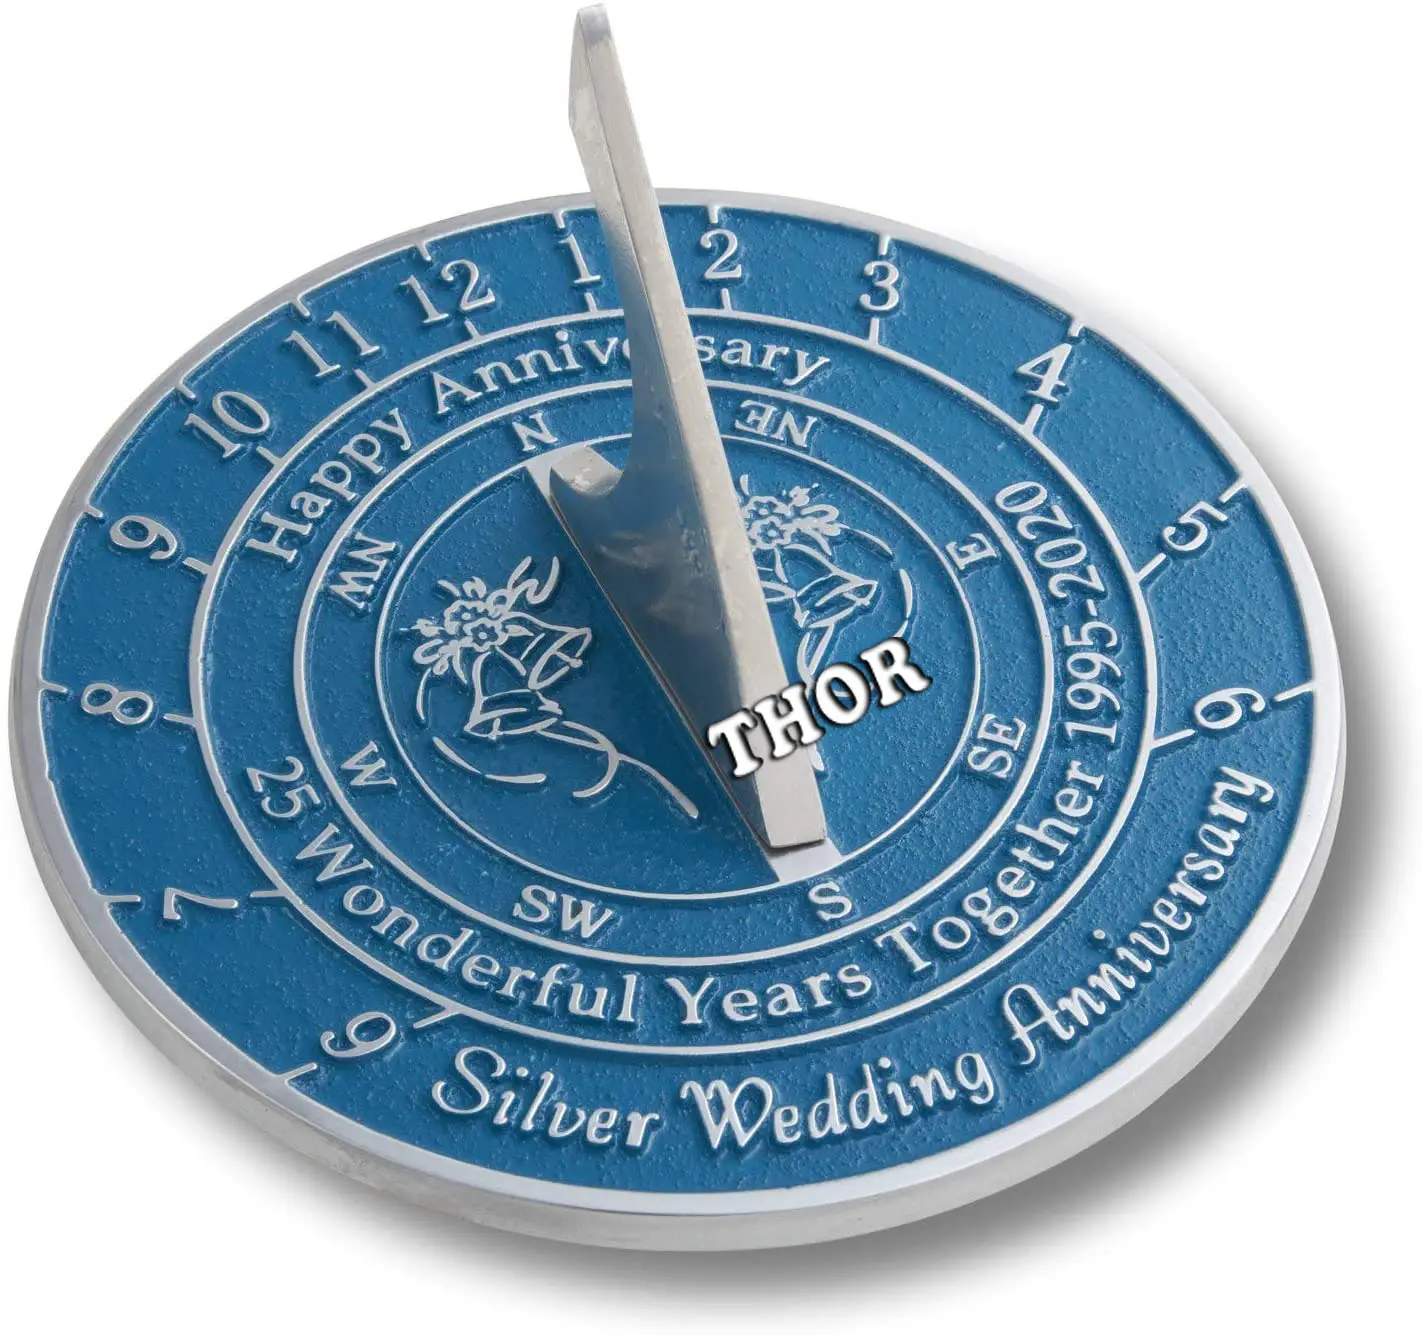 Garden Sundial Compass Silver Wedding Anniversary Sundial 1995-2020 pocket compass